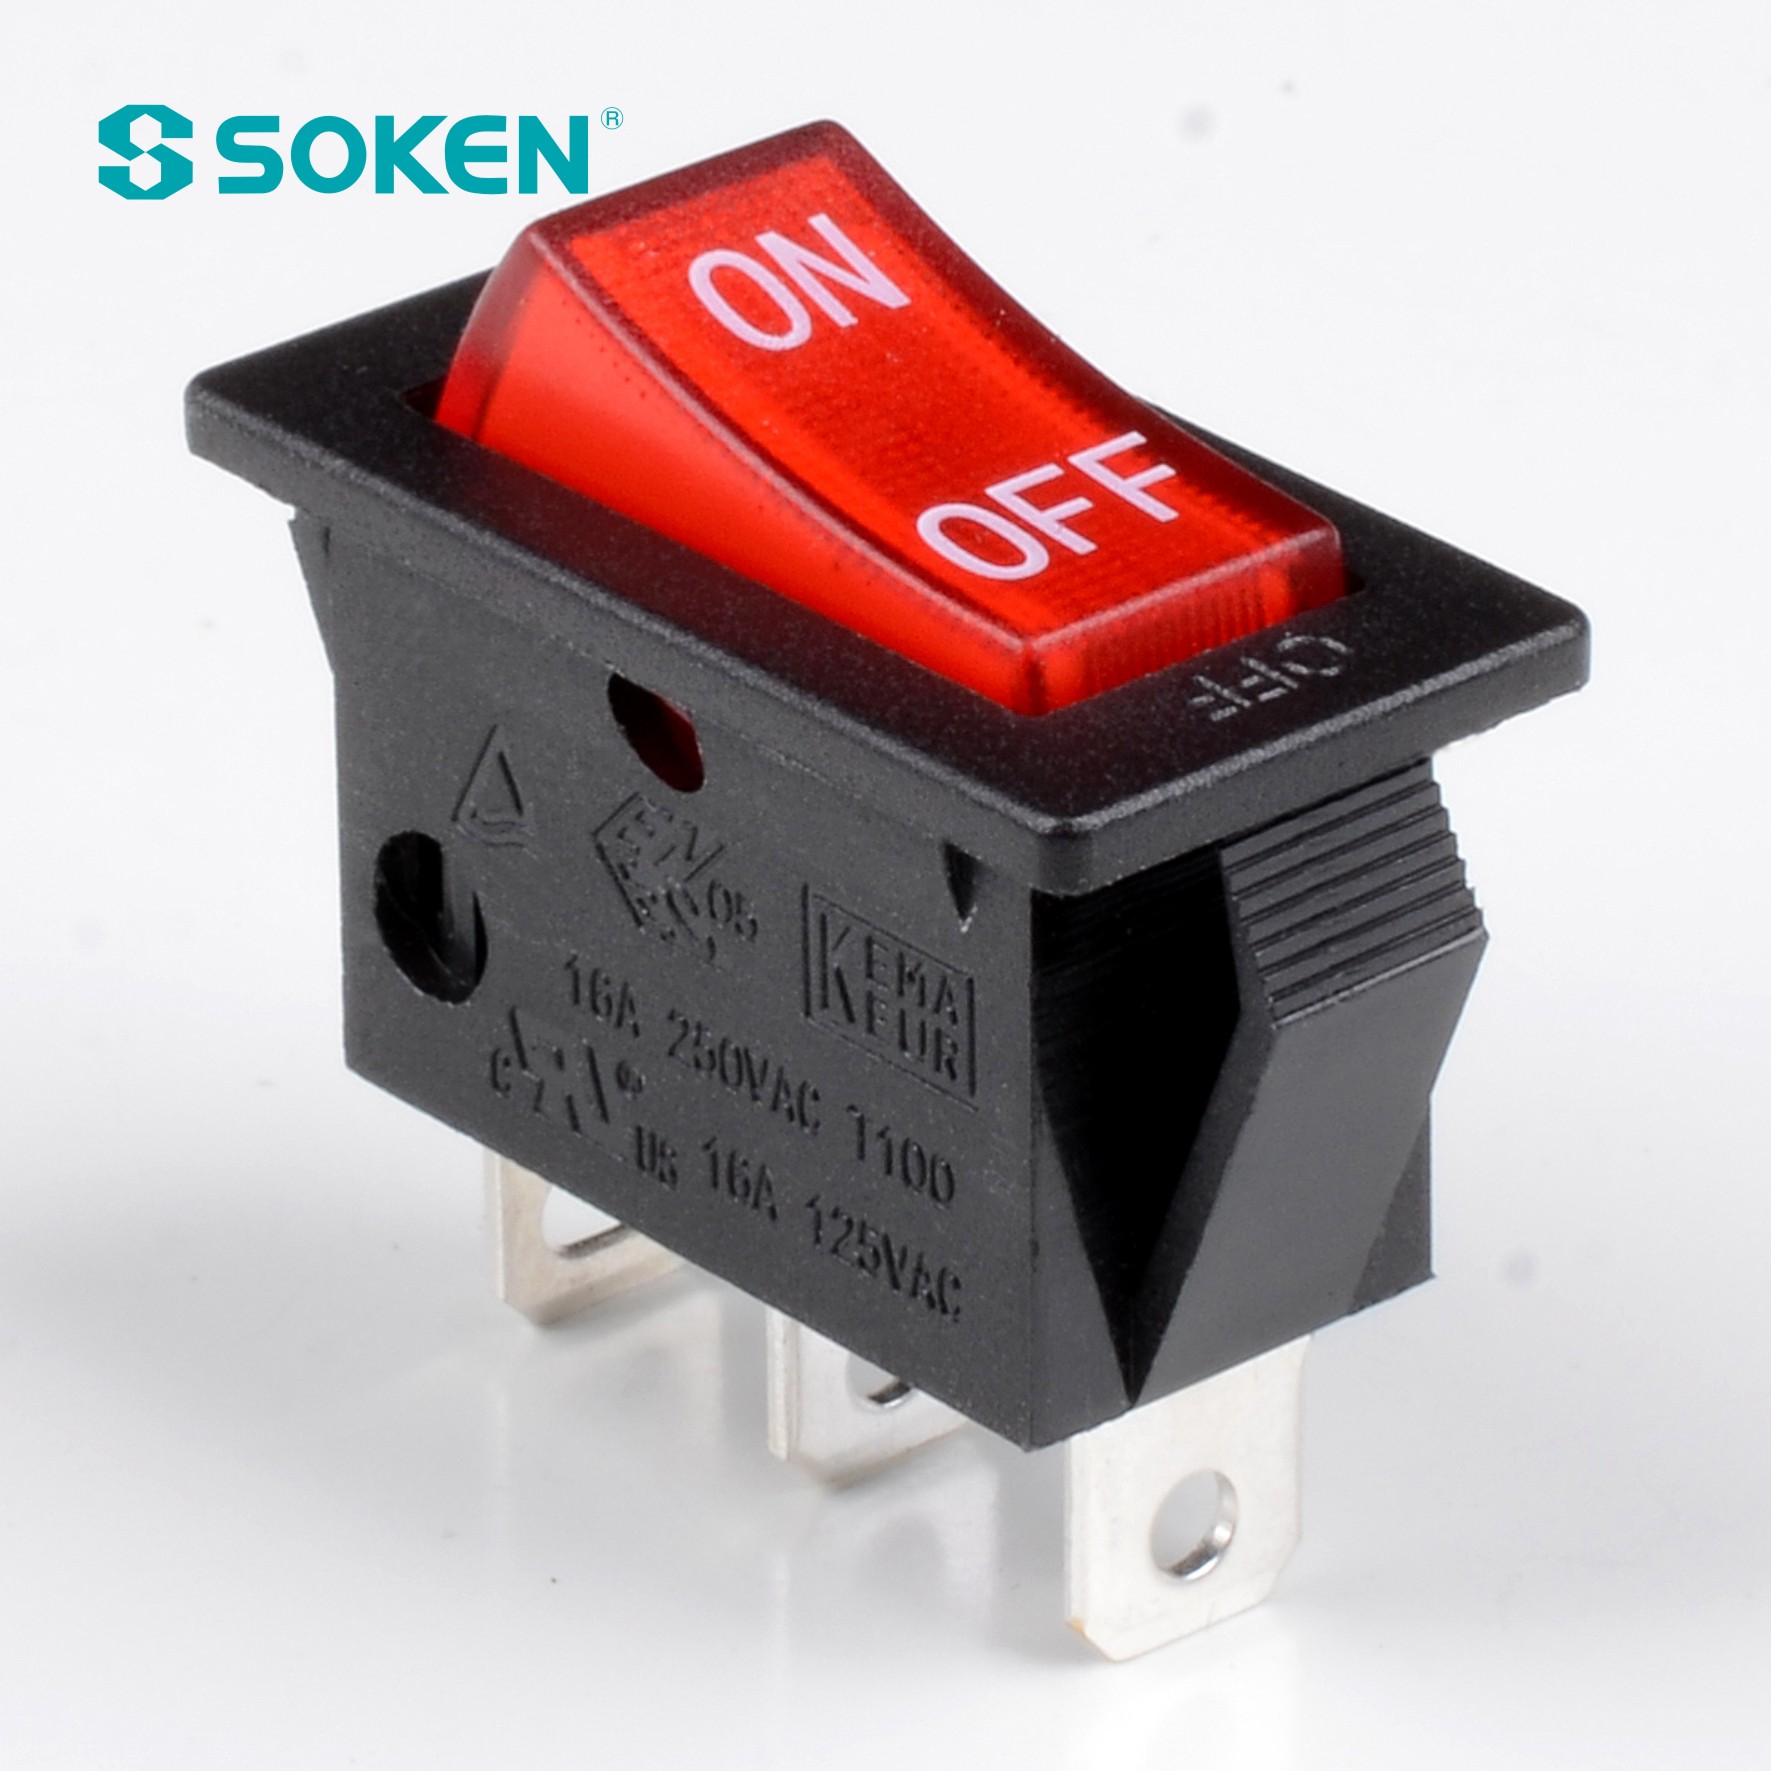 Soken Rk1-17 1X1n off Illuminated Rocker Switch